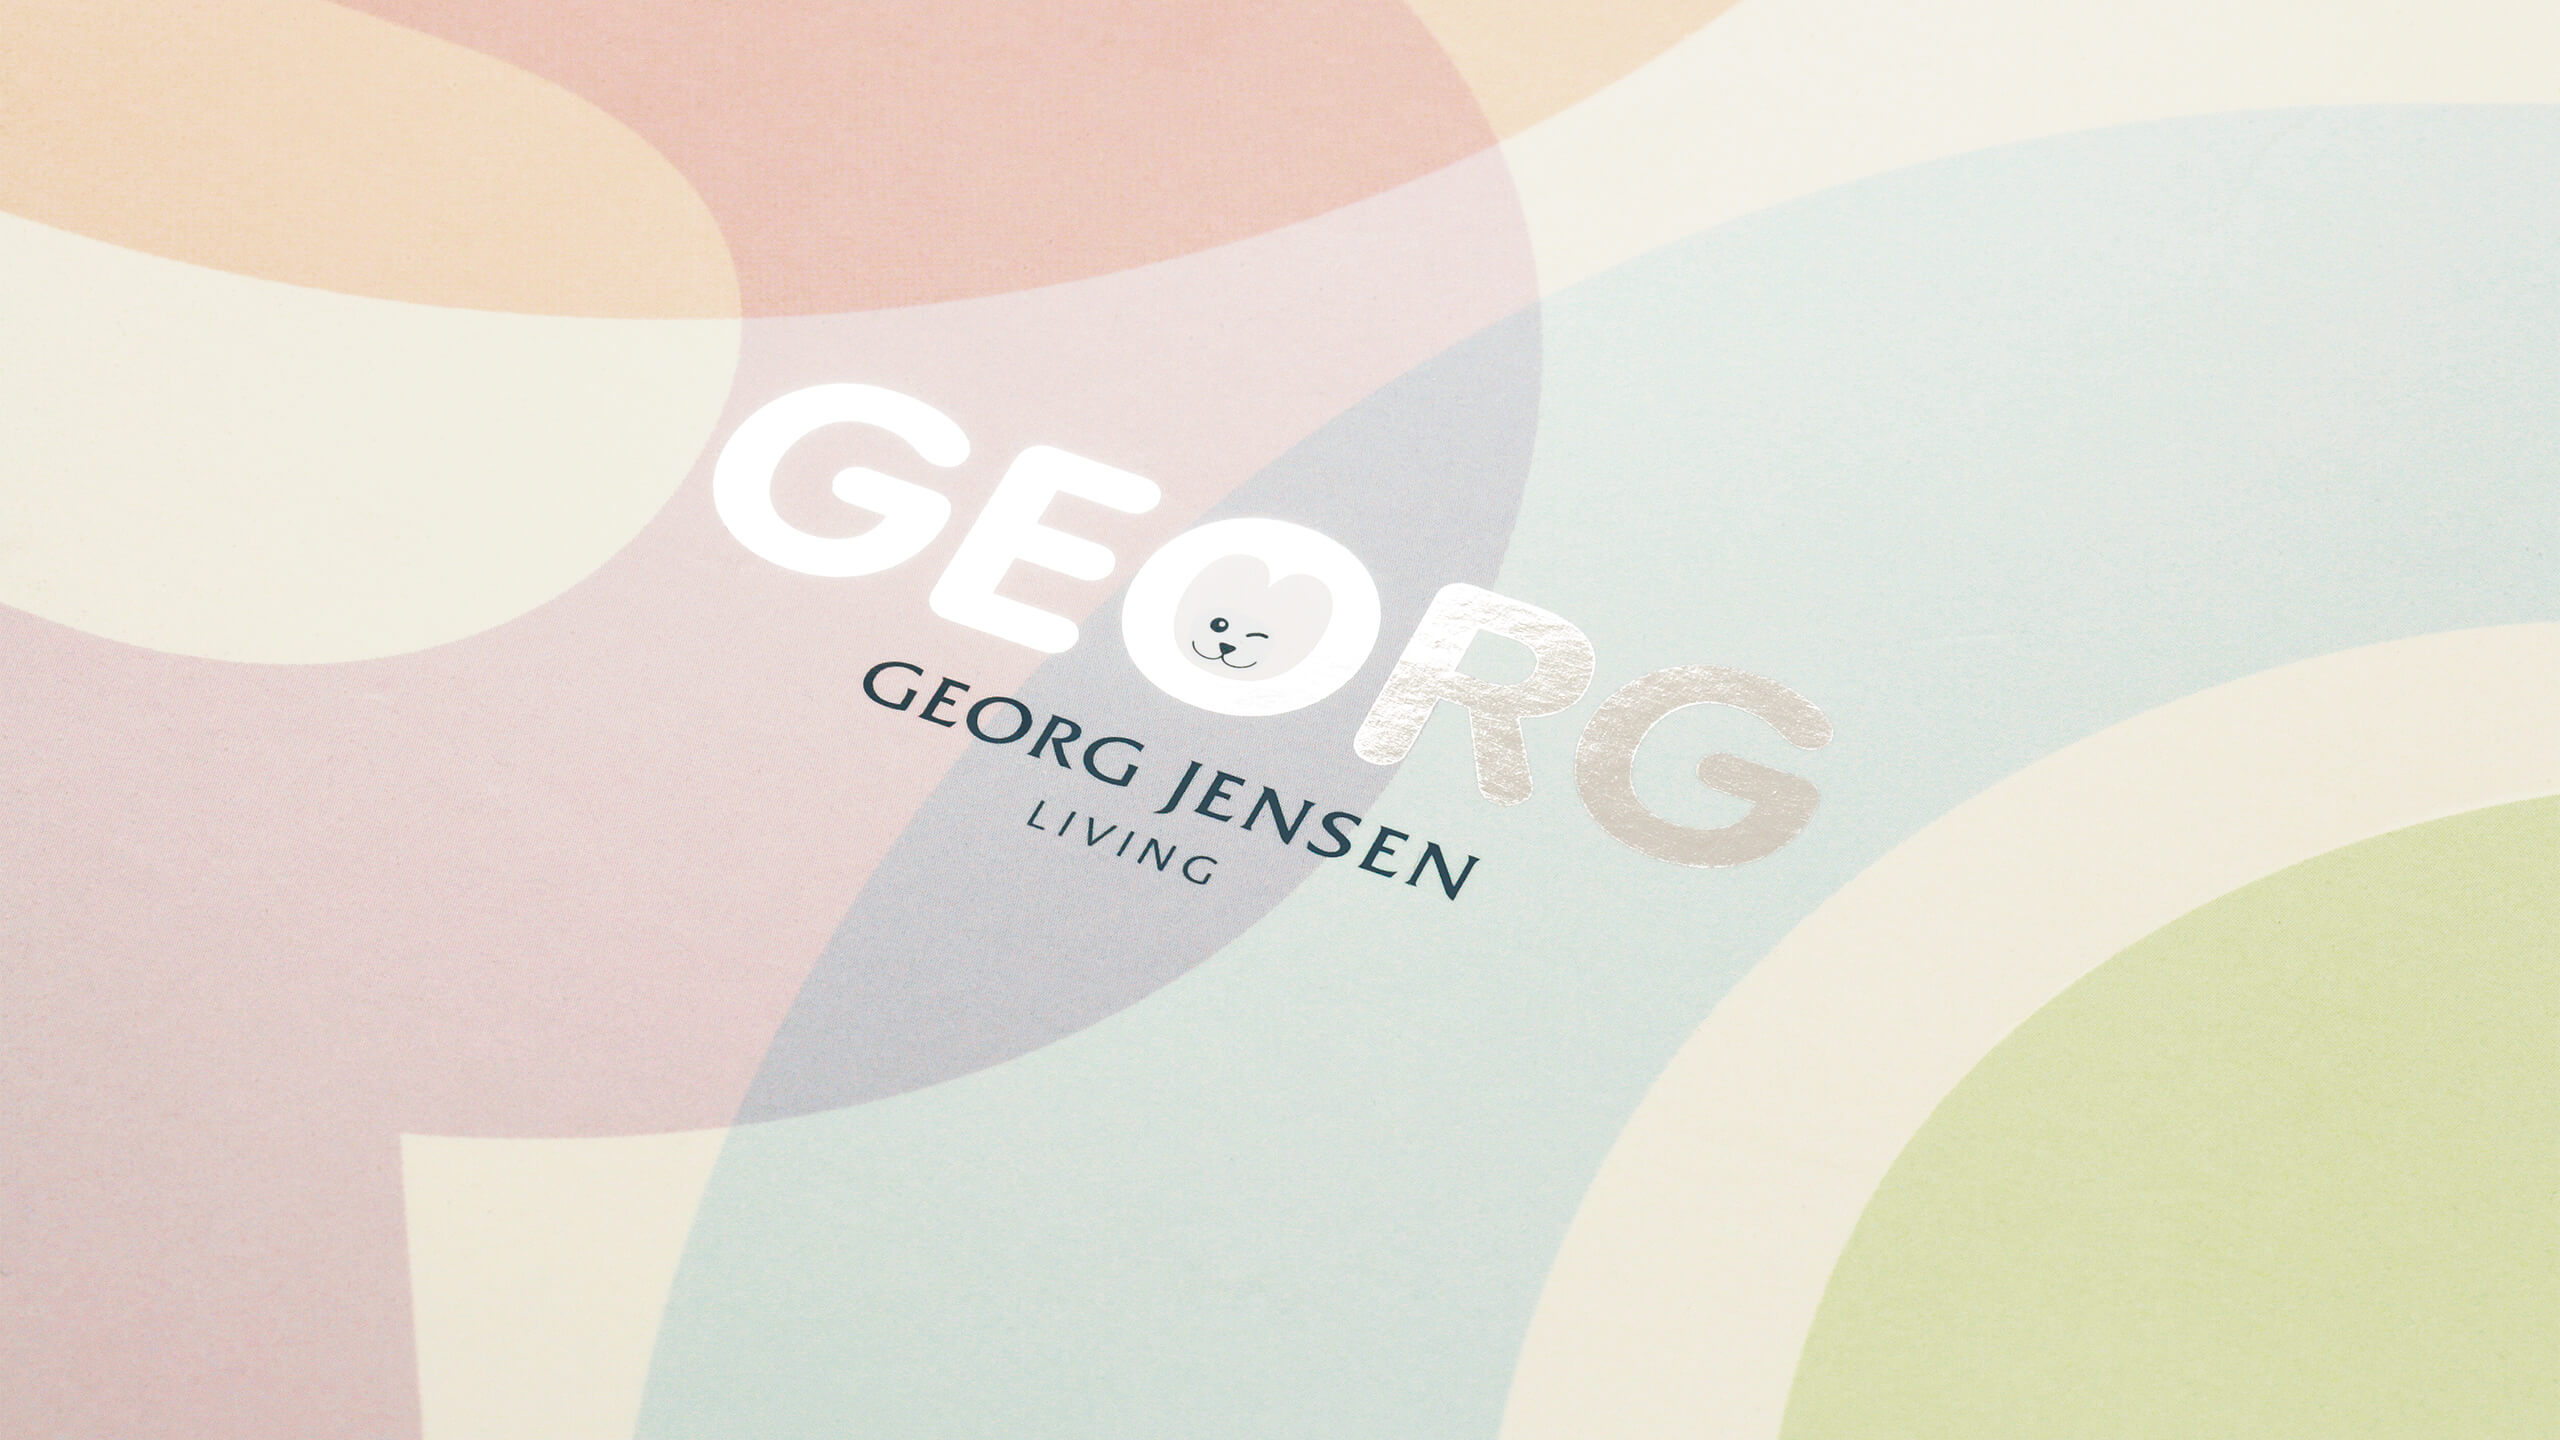 GEORG-logo-sølv_2560x1440